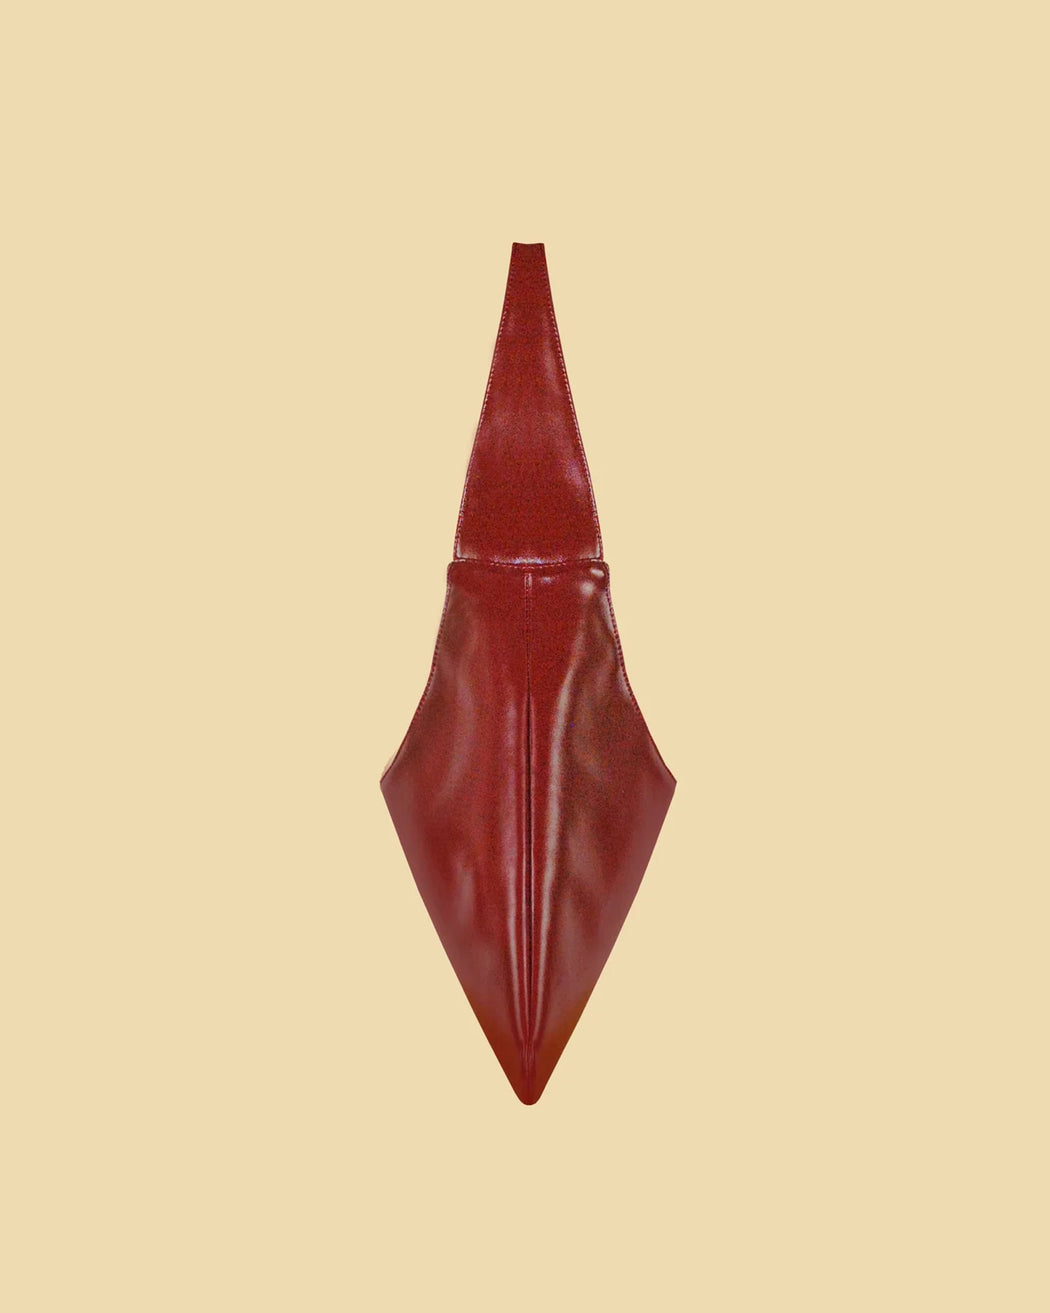 Agave Triangular Tote – Burgundy Red